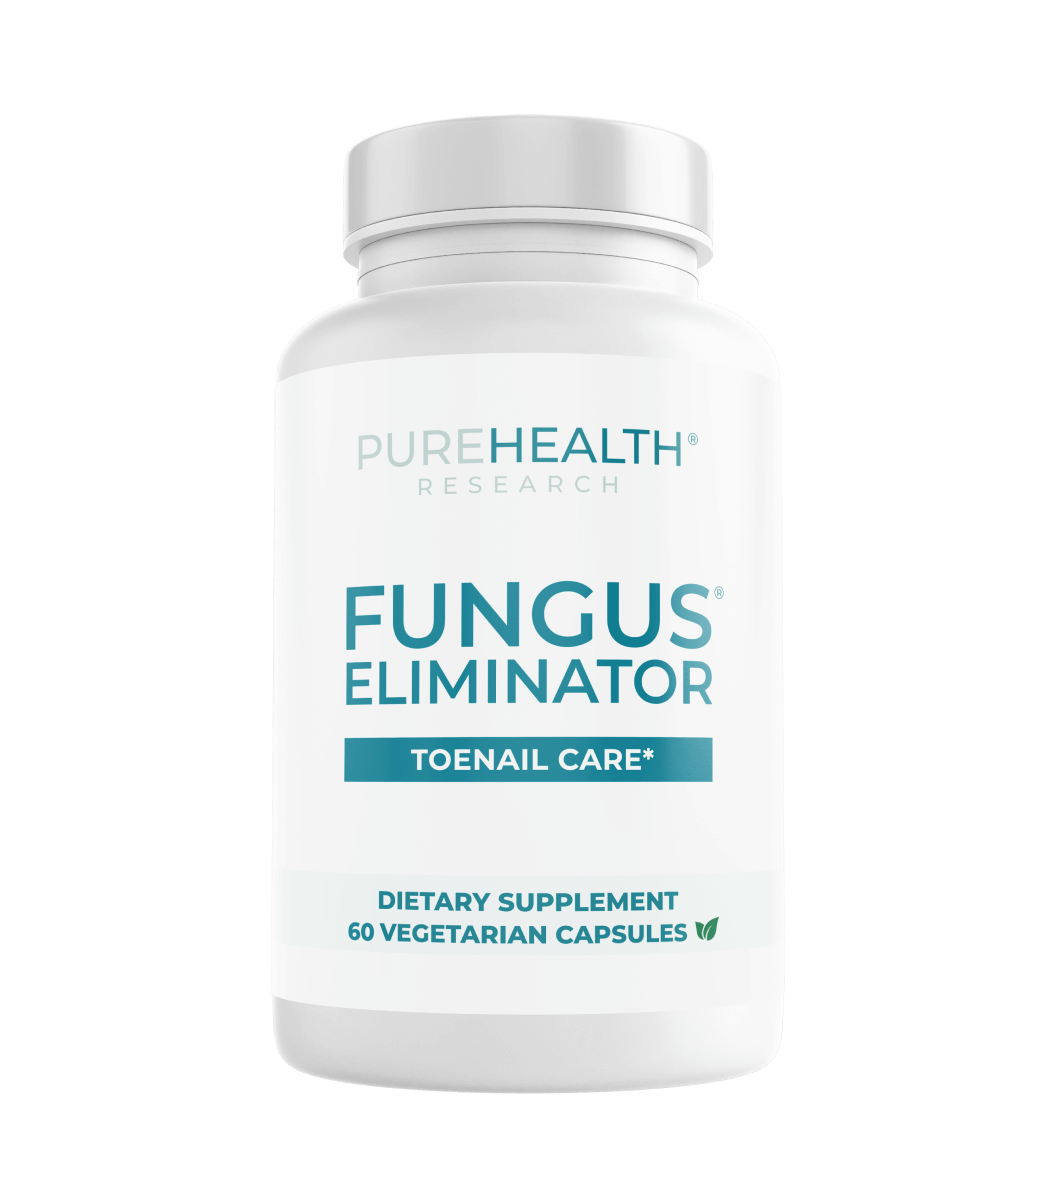 Fungus Eliminator Purehealth Research